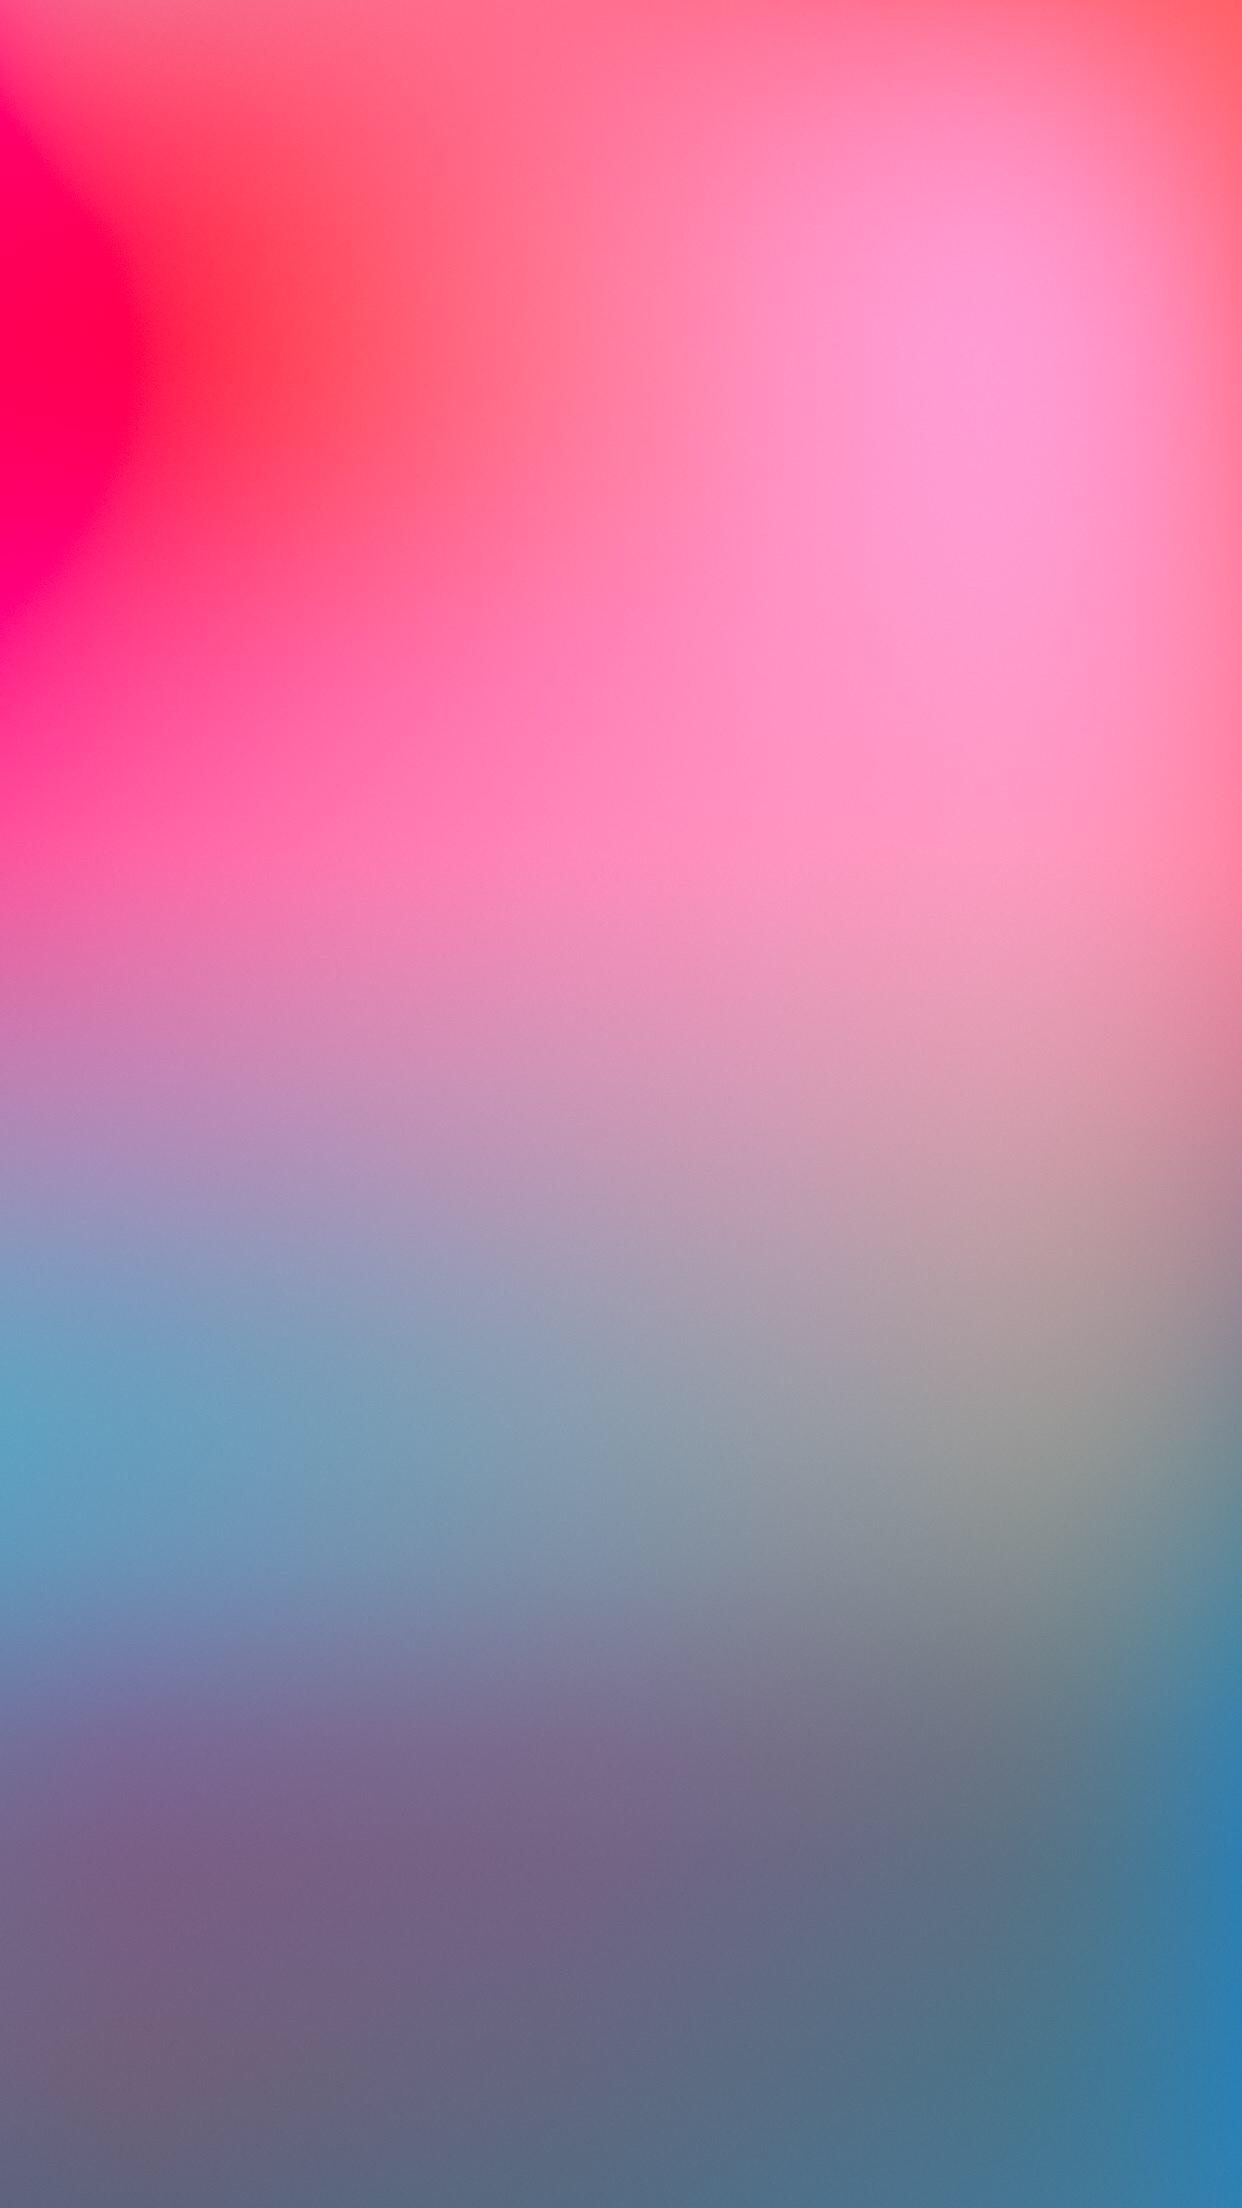 blurred, Colorful, Vertical, Portrait display Wallpaper